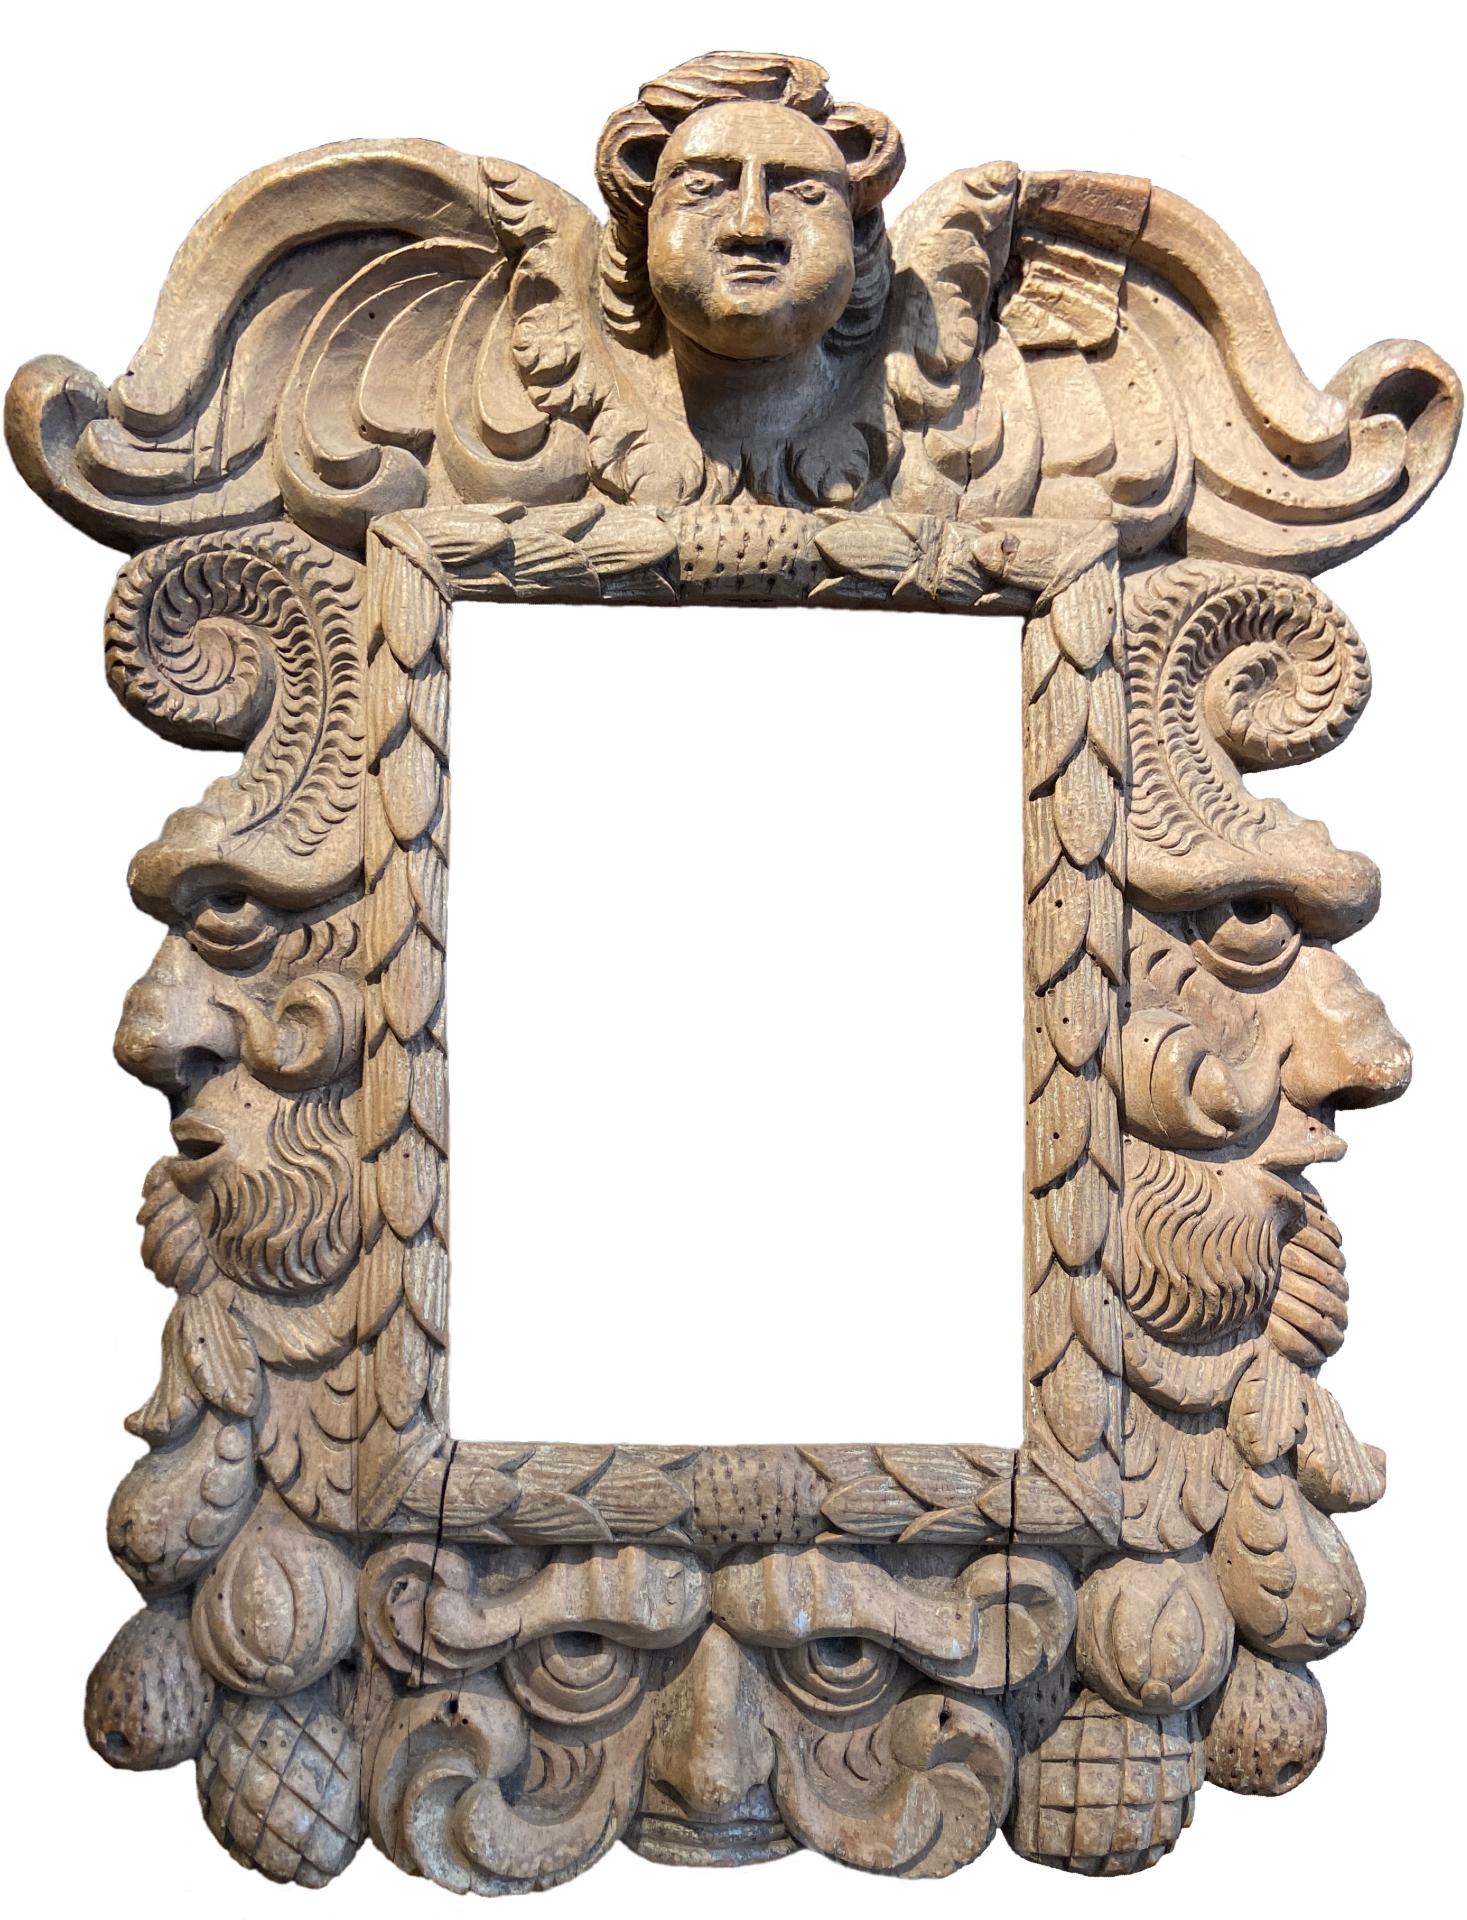 Hand Carved Wooden Frame, 16th Century European School 